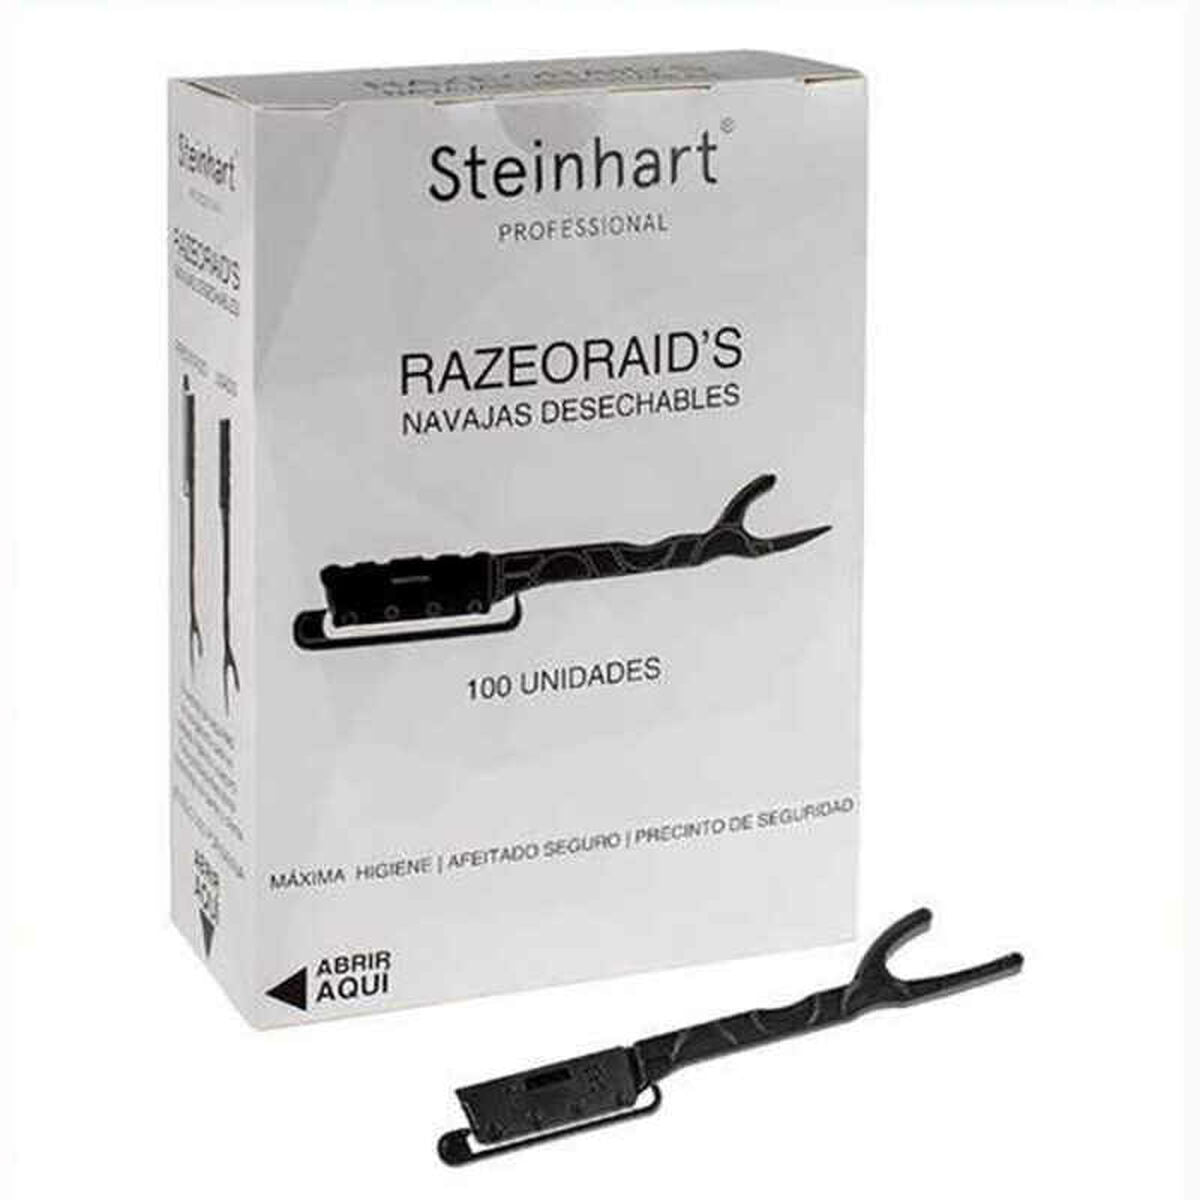 Razor Shells Steinhart Razeoraid's Disposable Black 100 Units (100 uds)